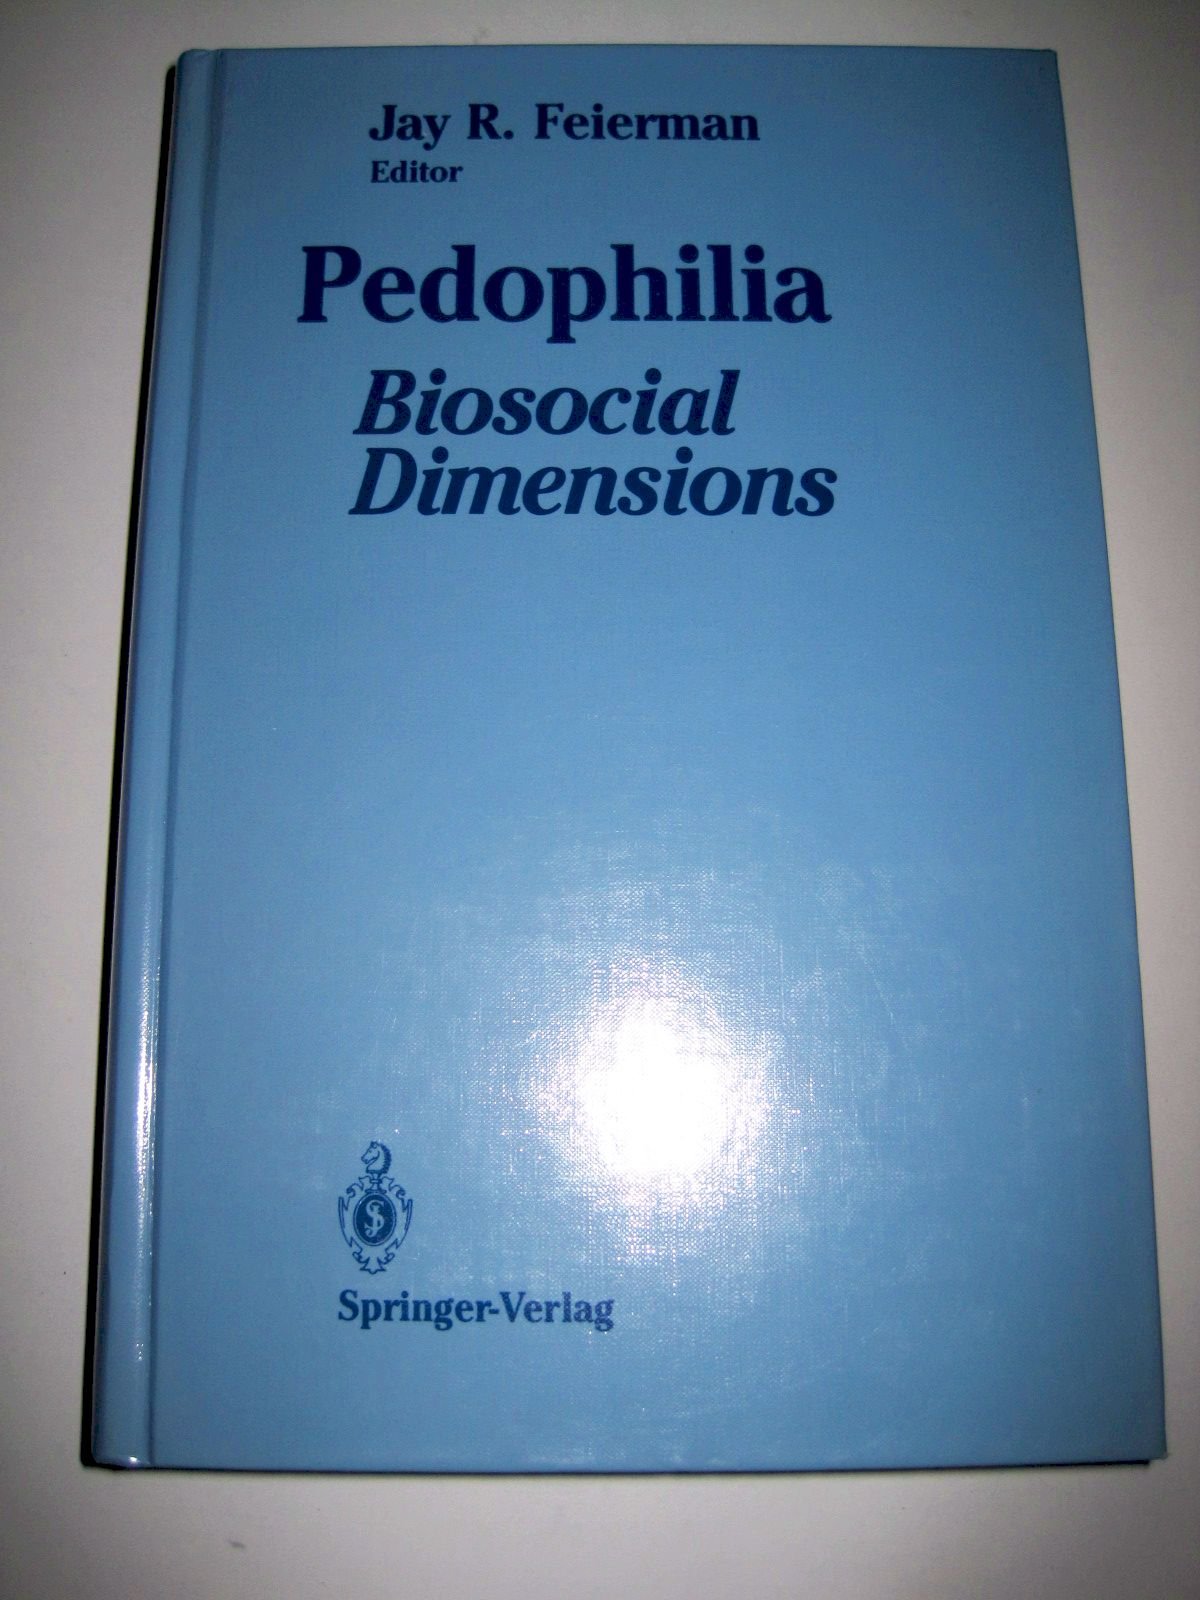 Pedophilia magazine reviews